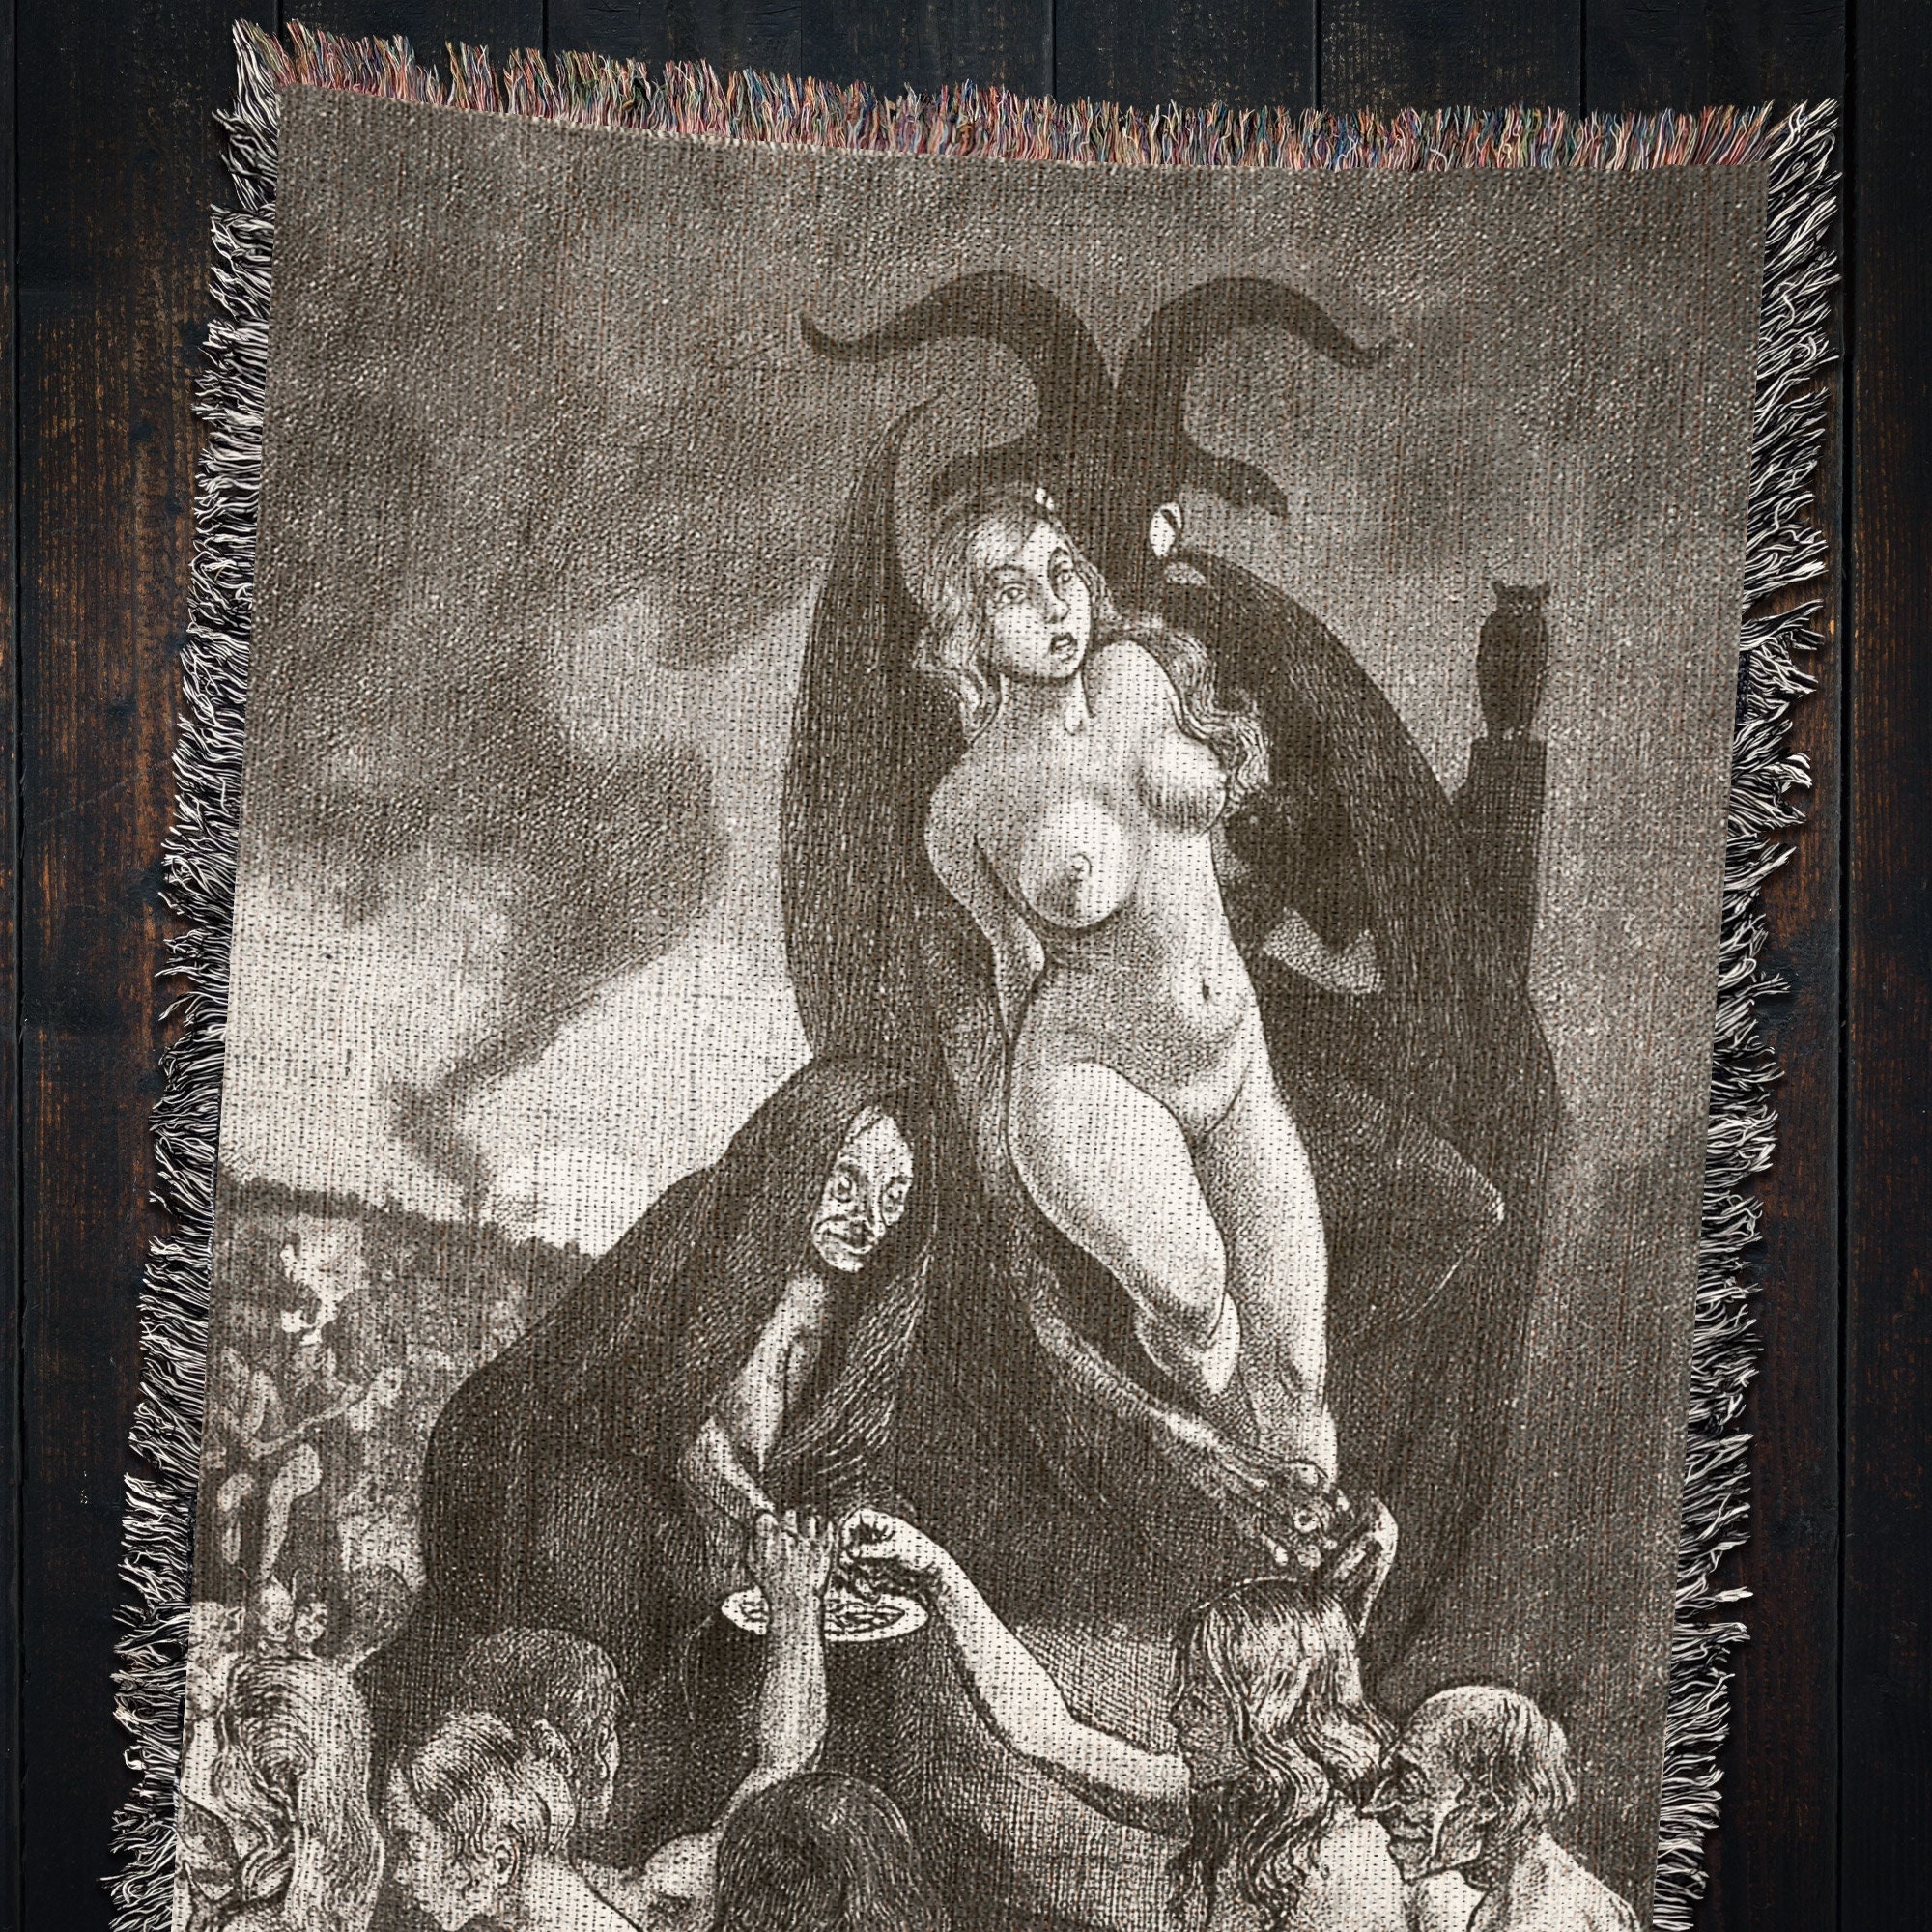 Satanic Decor Vintage Baphomet Demon Evocation Woven Throw Blanket